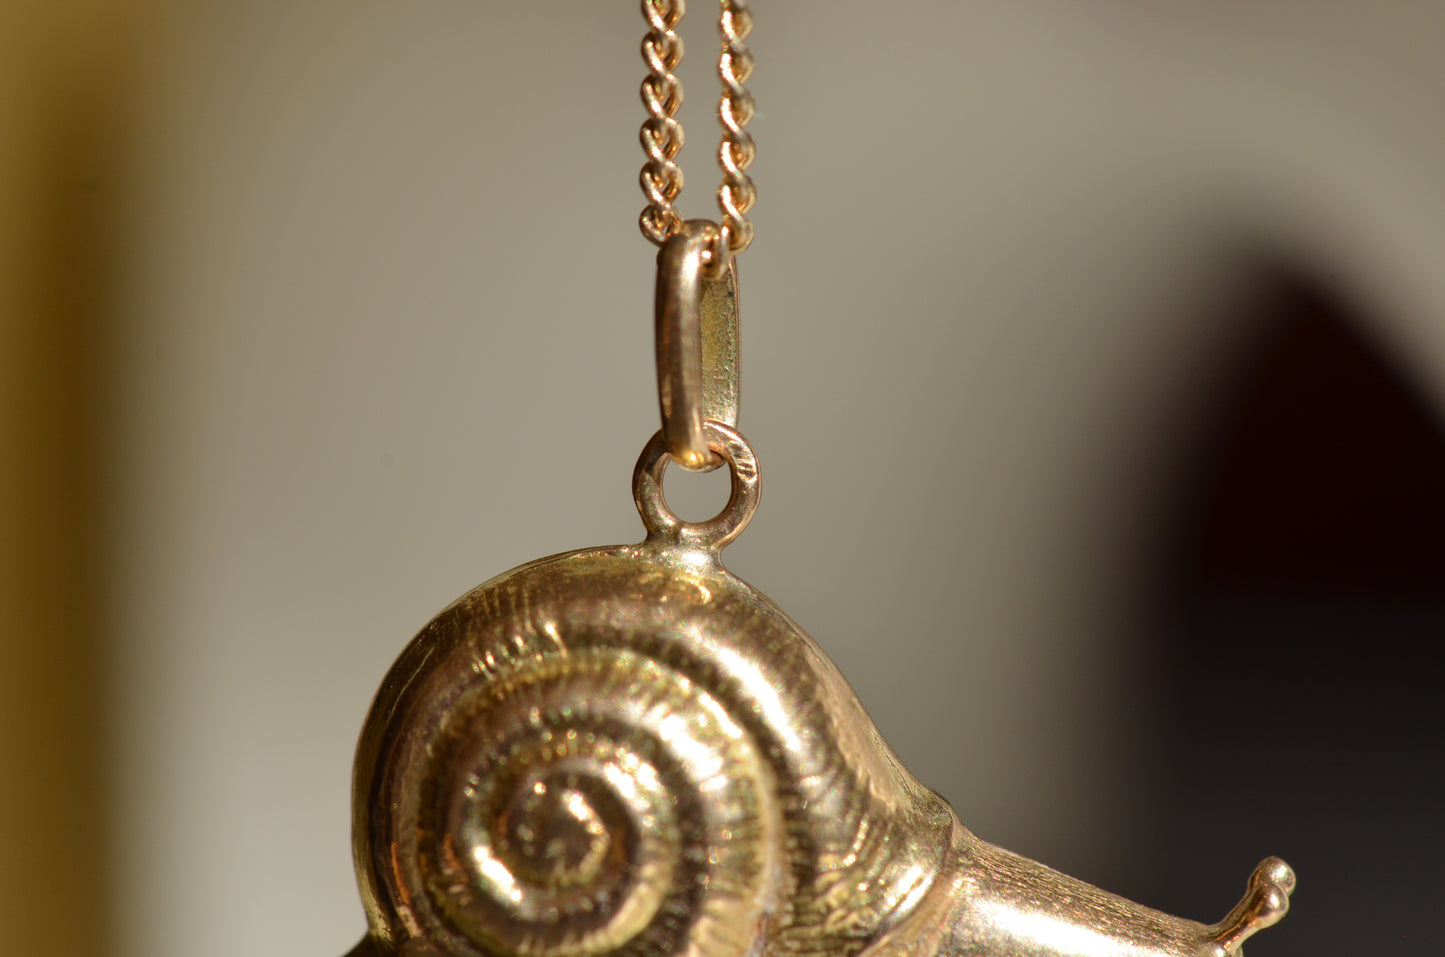 Charming Vintage Snail Pendant